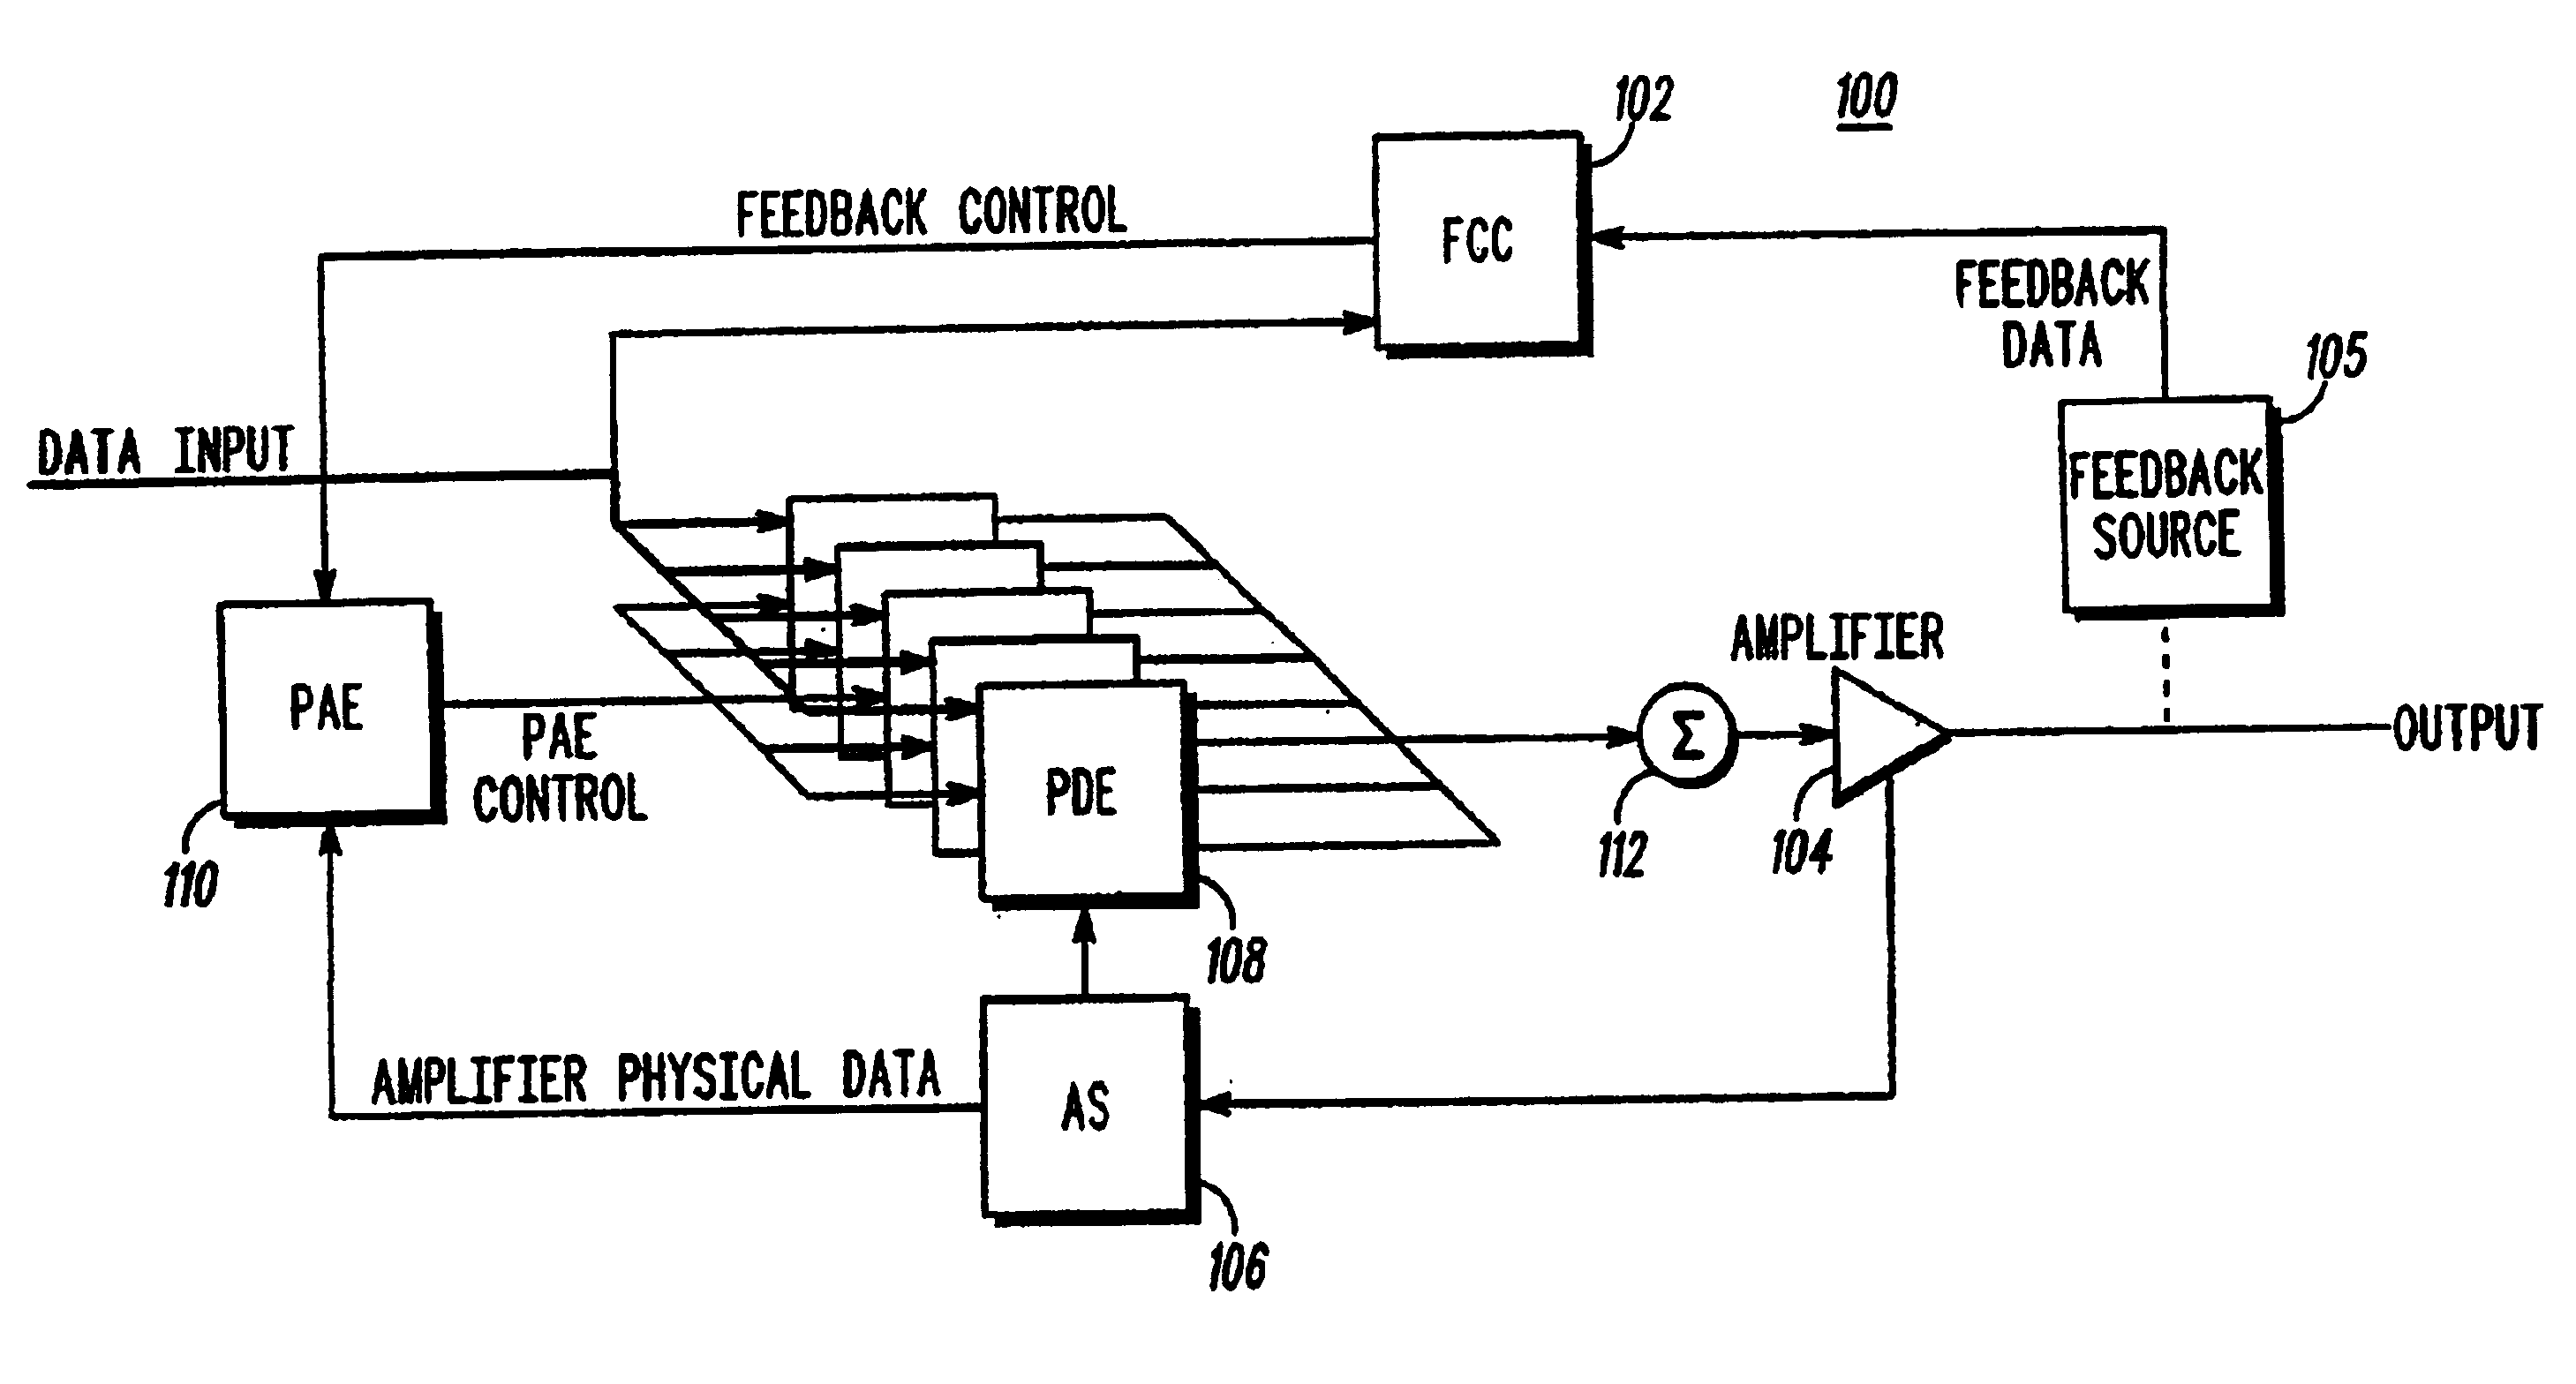 Digital predistortion system for linearizing a power amplifier